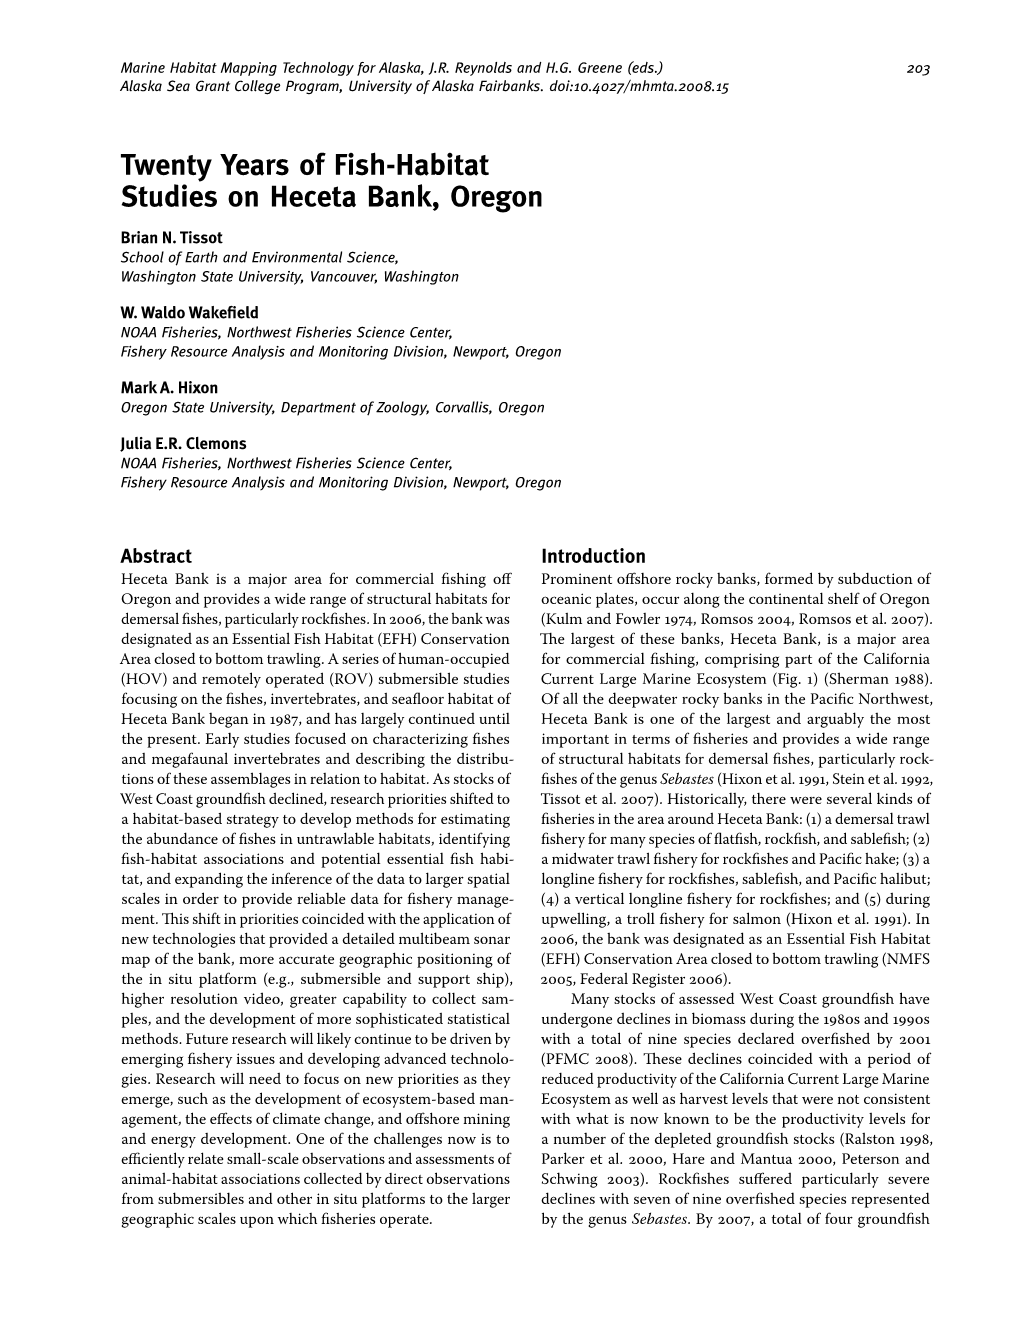 Twenty Years of Fish-Habitat Studies on Heceta Bank, Oregon